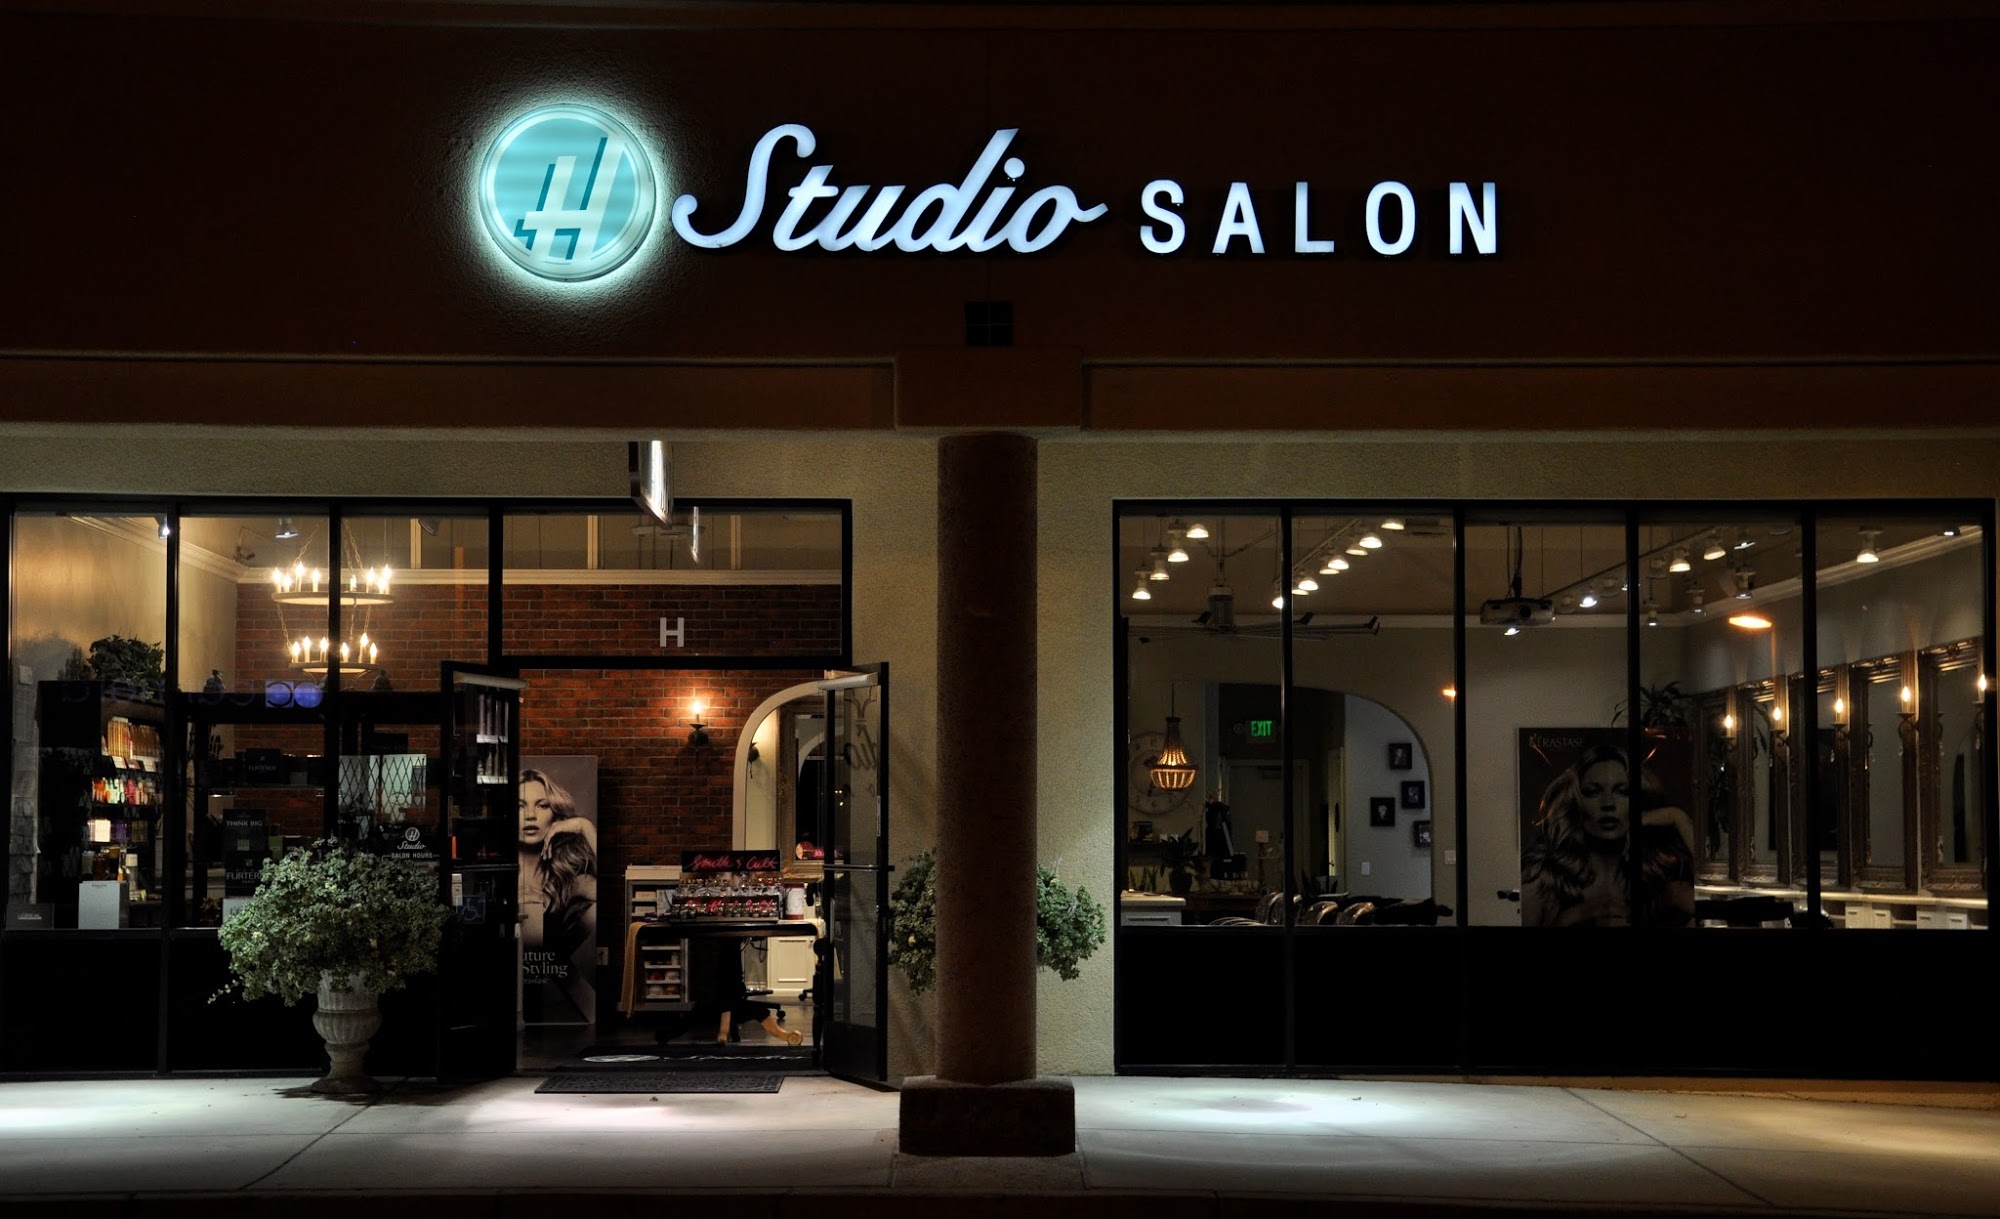 H Studio Salon